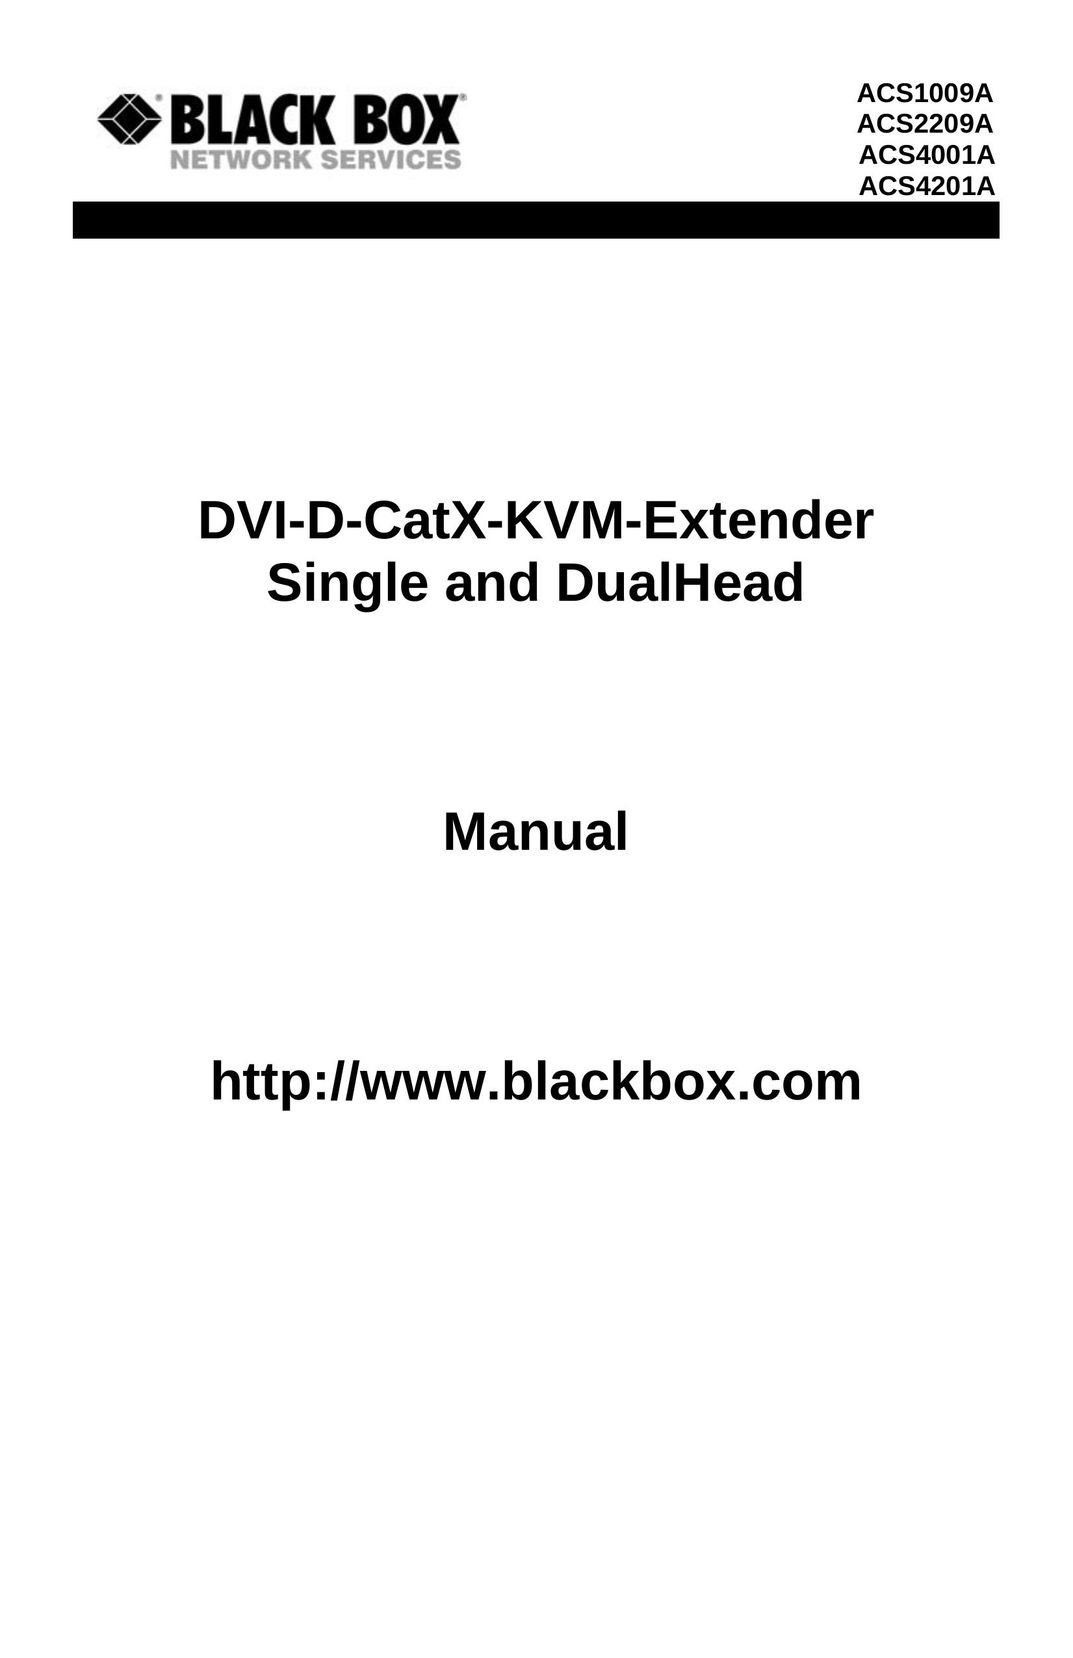 Black Box ACS1009A Switch User Manual